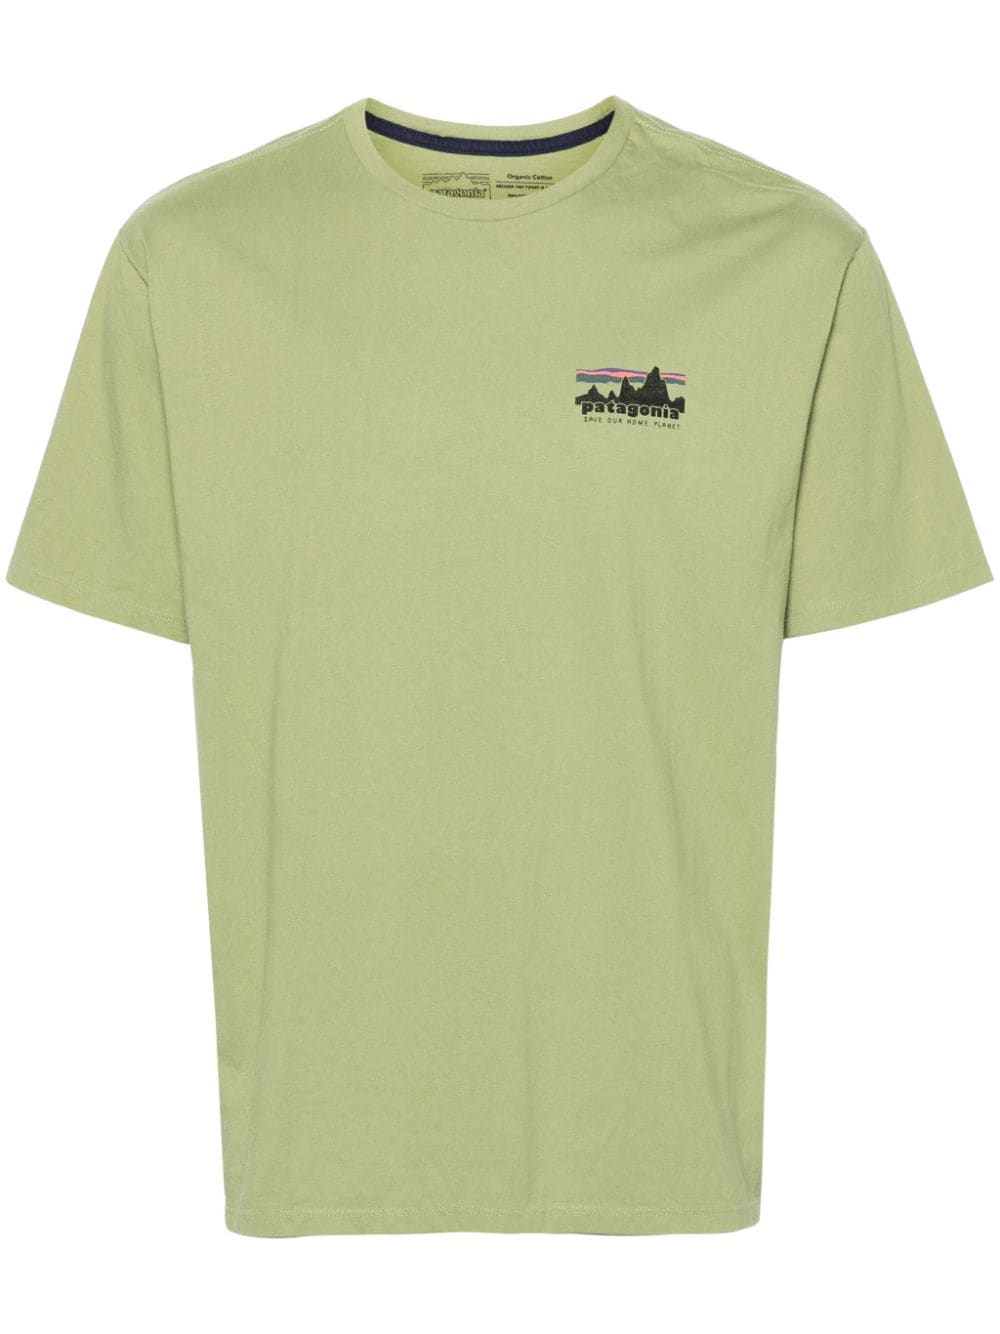 '73 Skyline organic cotton T-shirt